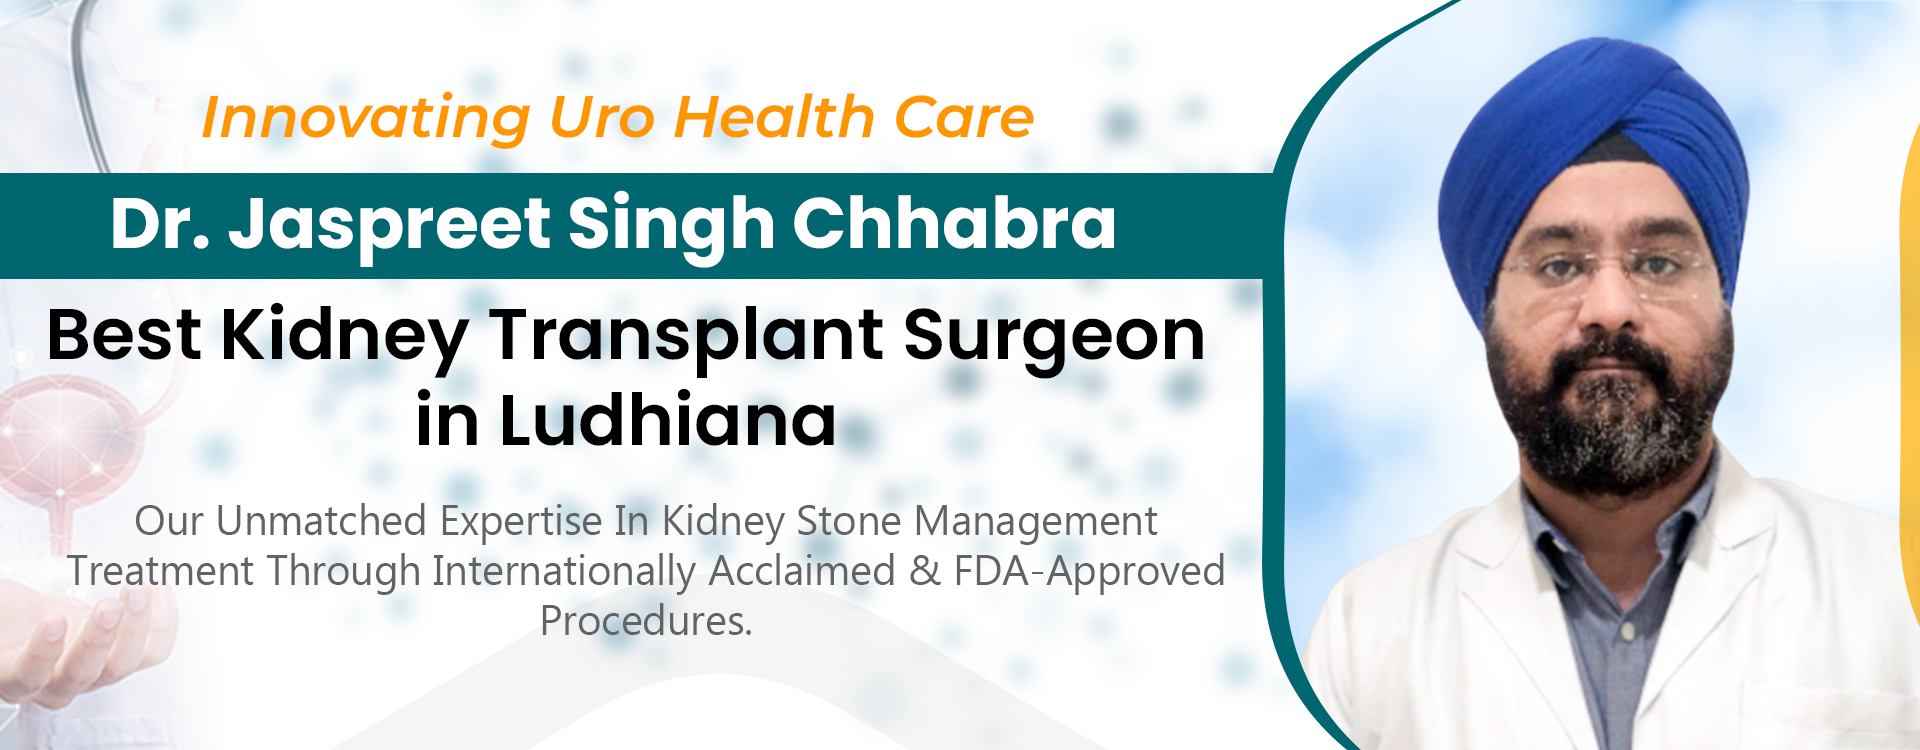 Dr. Jaspreet Singh Chhabra